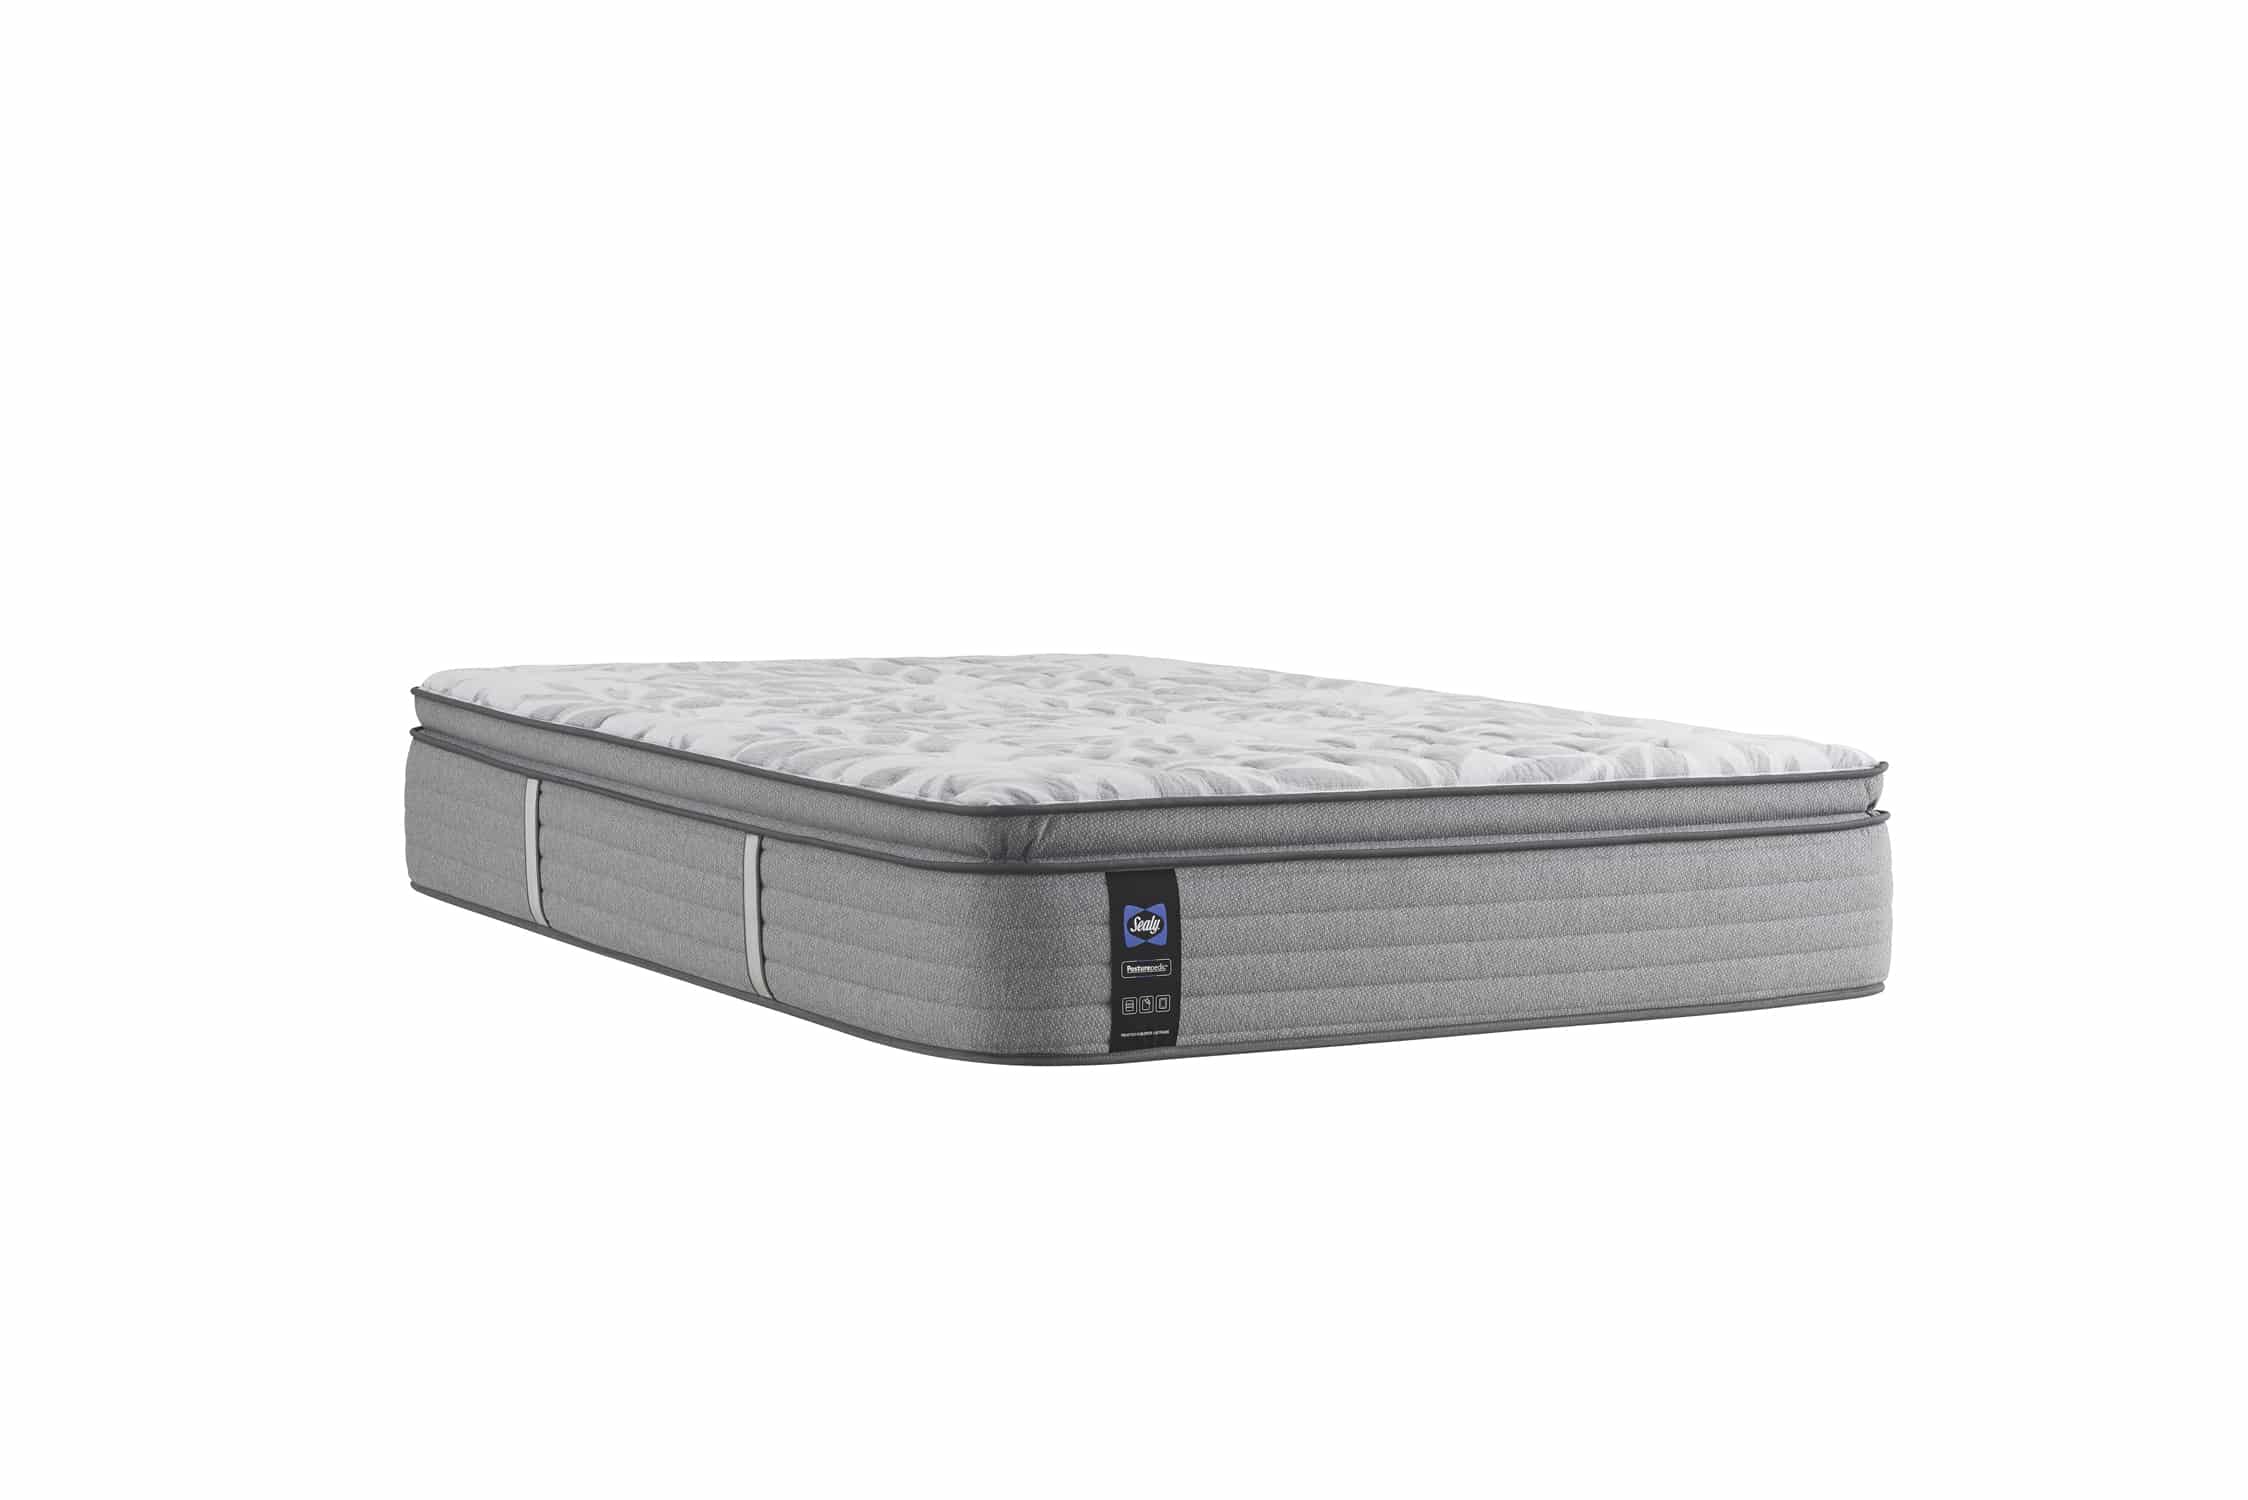 posturepedic prichard ultra firm sealy mattress